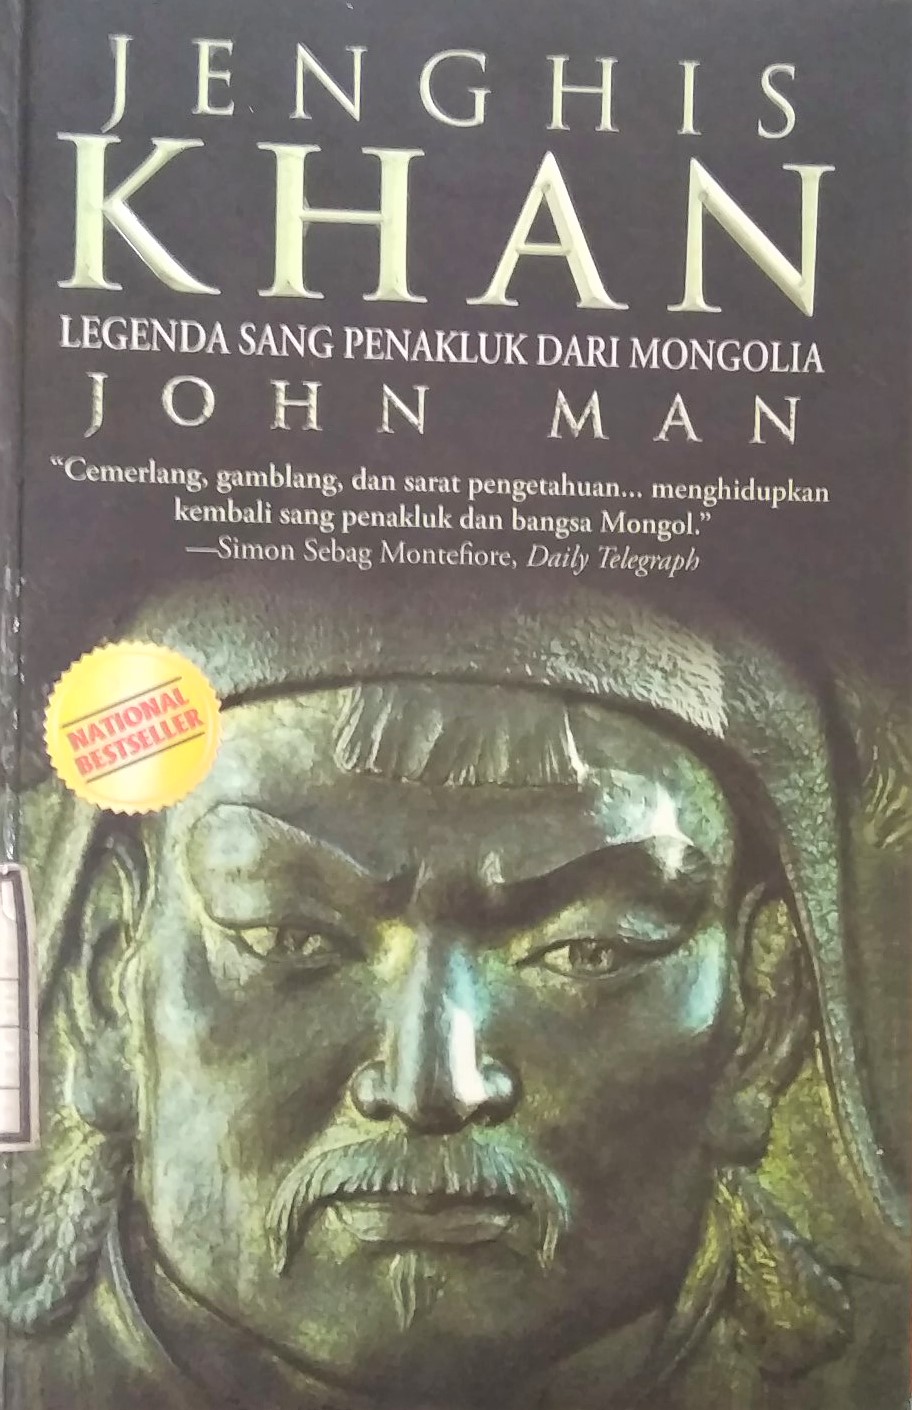 Jenghis khan: legenda sang penakluk dari mongolia